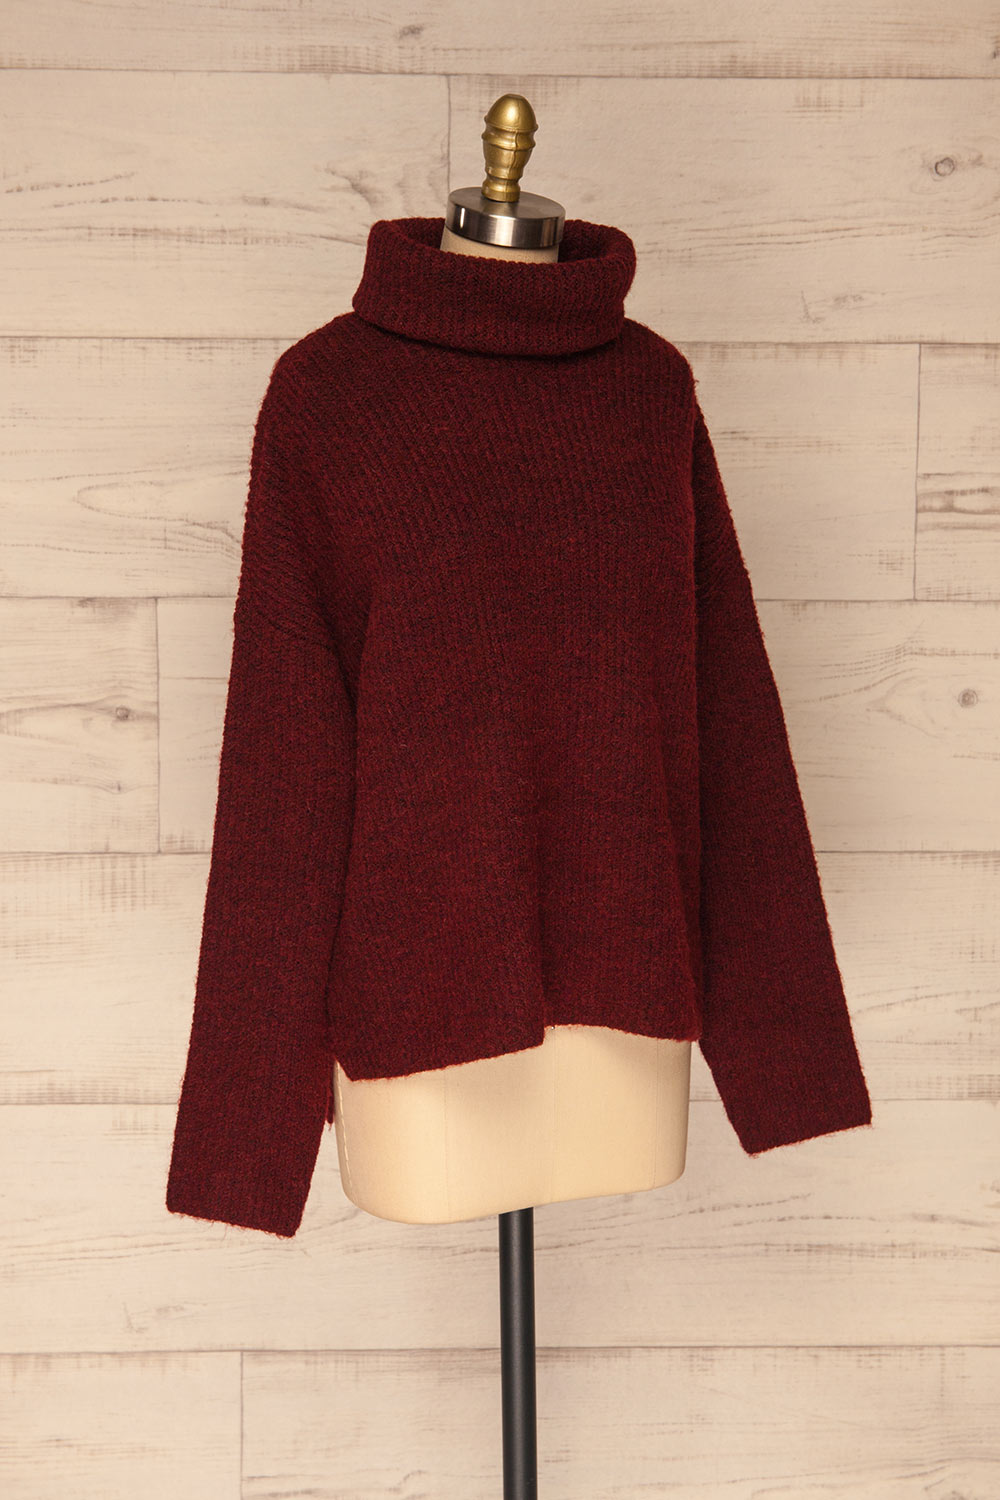 Givri Burgundy Knit Turtleneck Sweater | La petite garçonne side view 